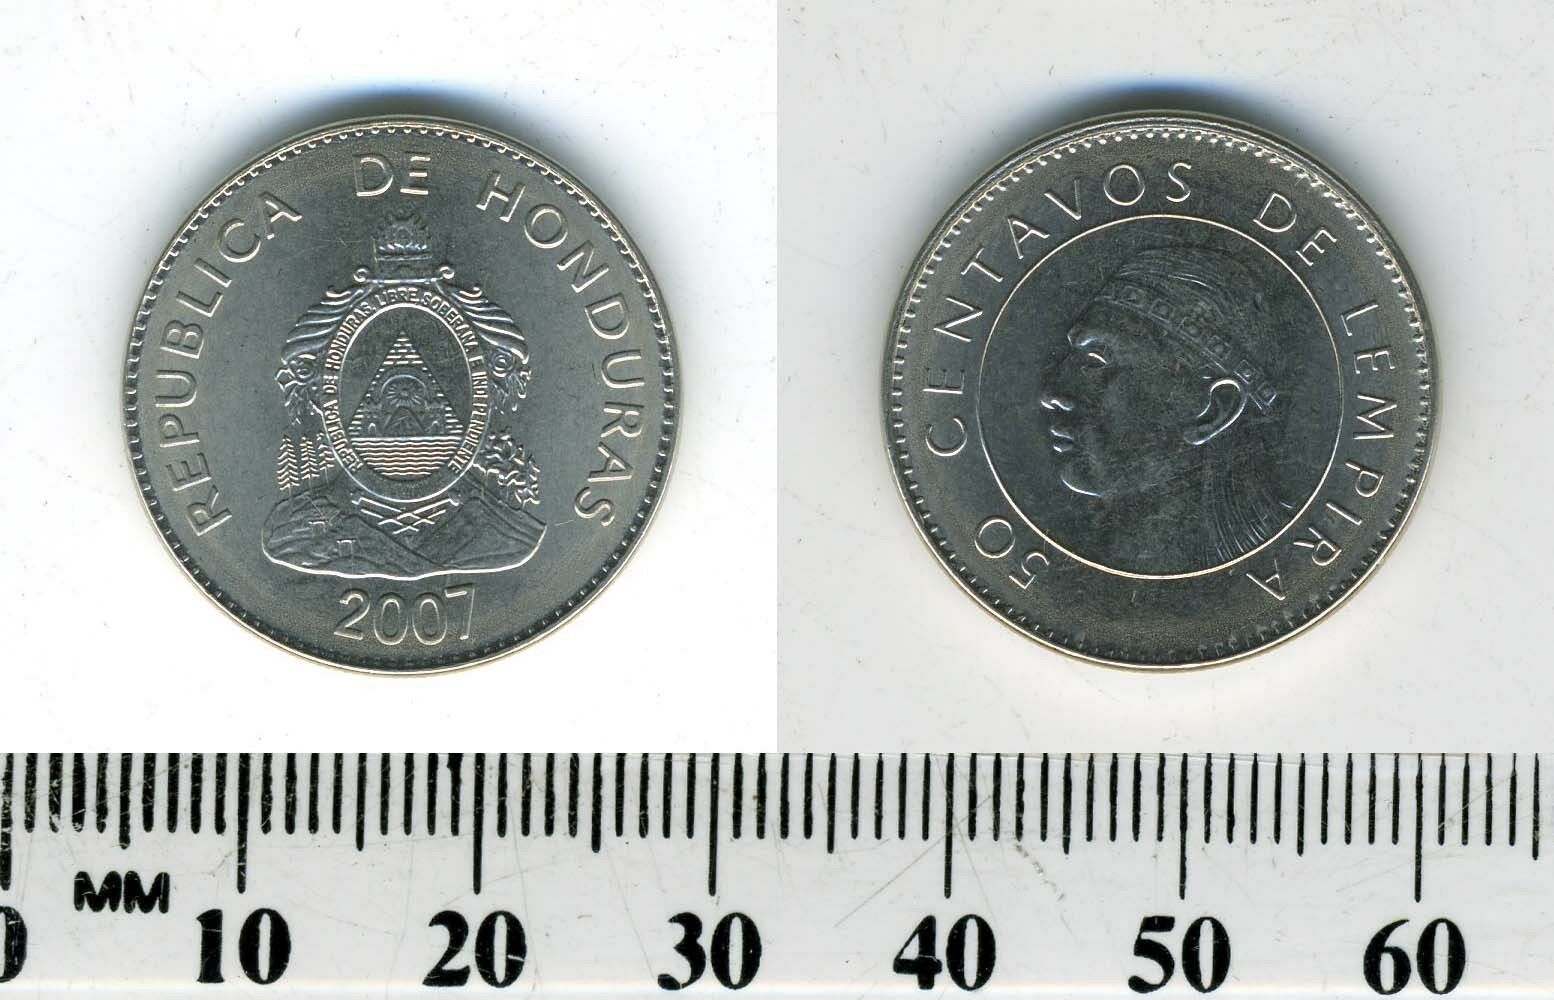 Honduras 2007 - 50 Centavos Nickel Plated Steel Coin - Indian Chief Lempira